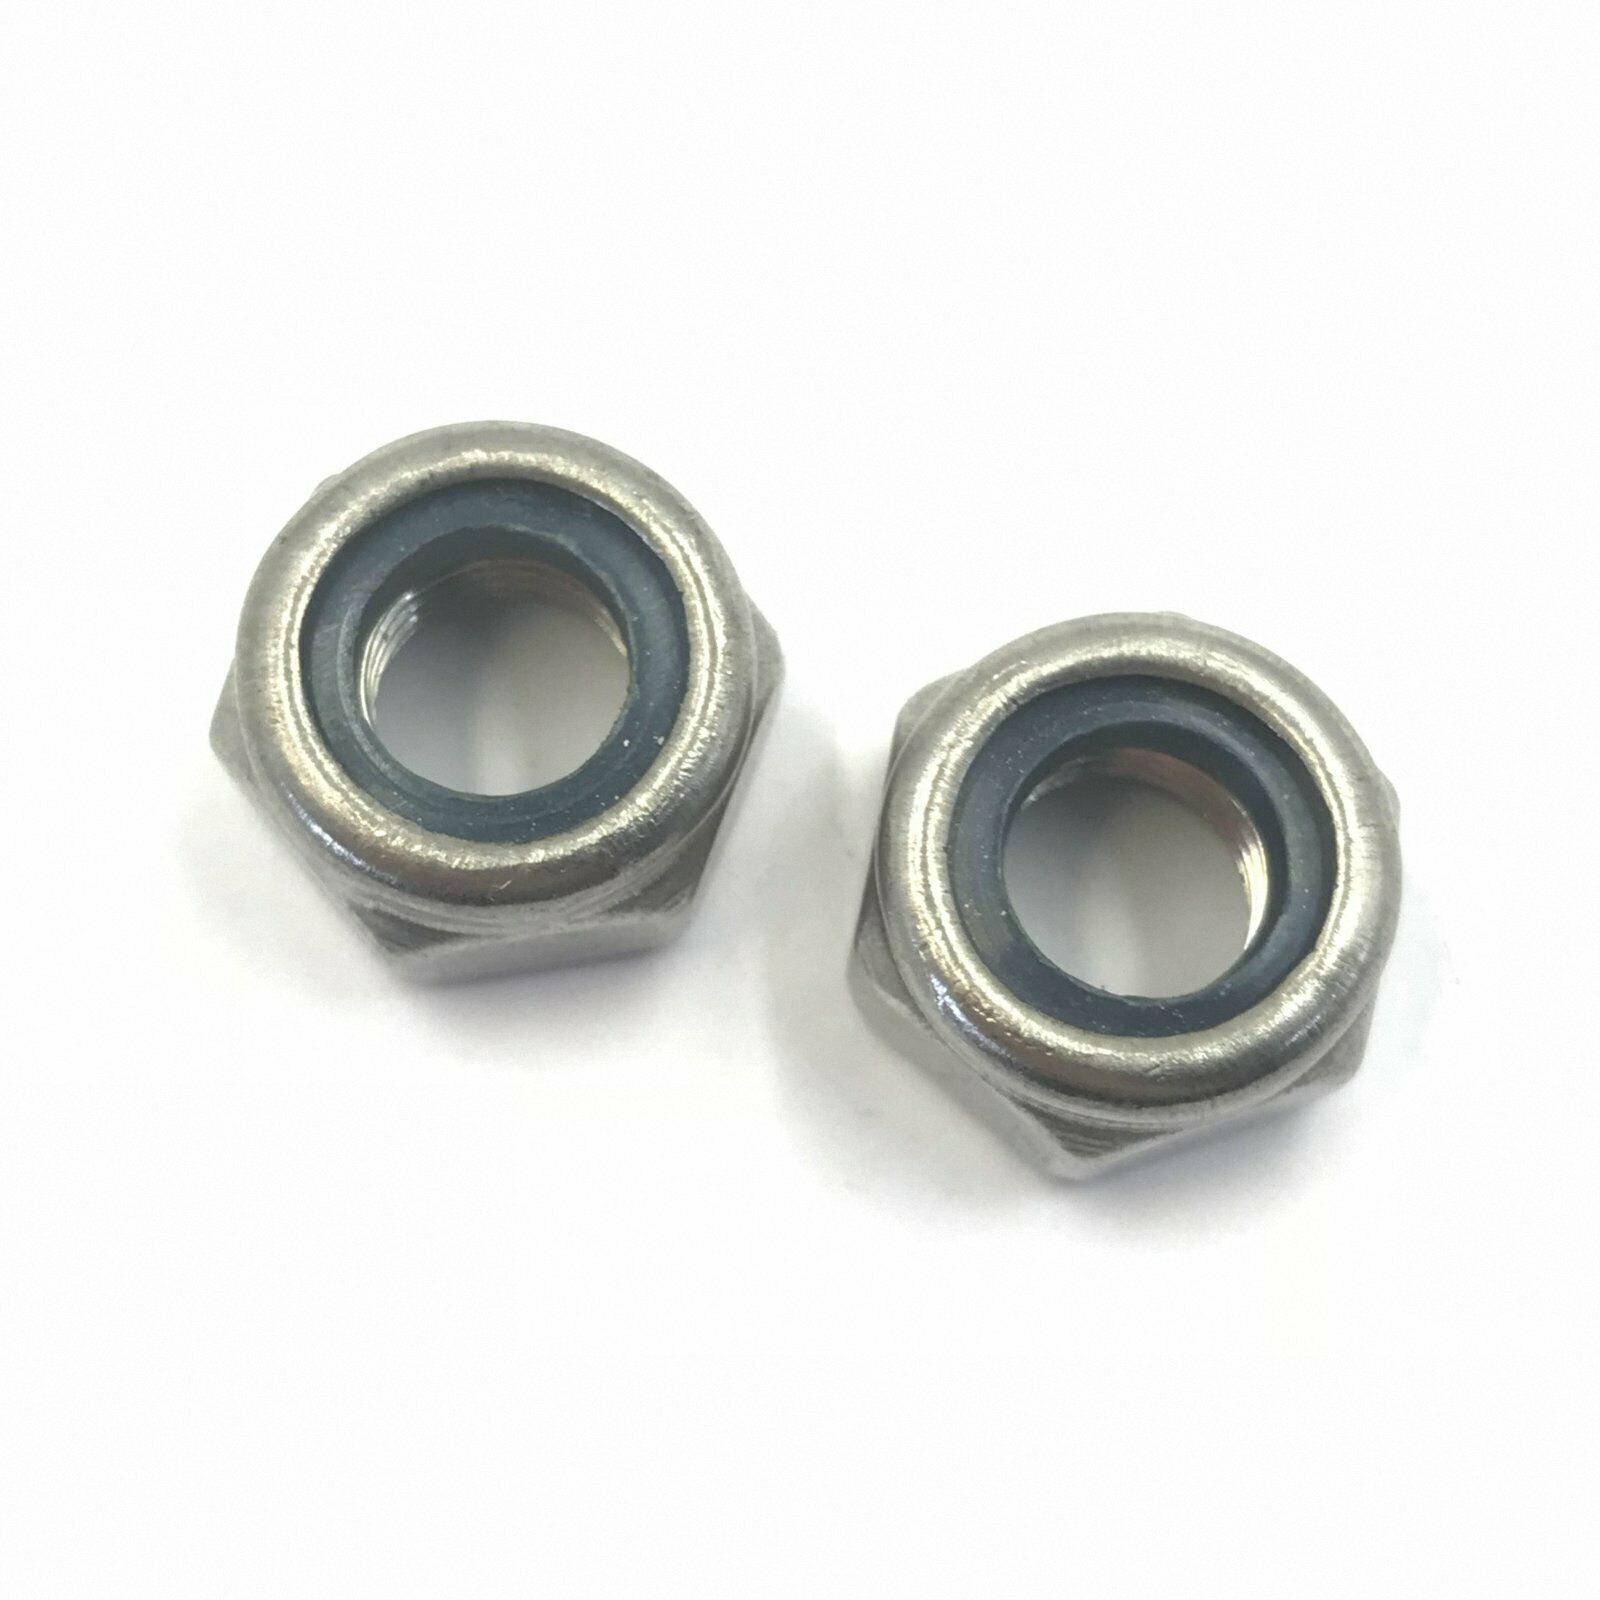 M12 x 1.75 Stainless Steel Nylon Lock Hex Nut Right Hand Thread 12Pcs [M1]